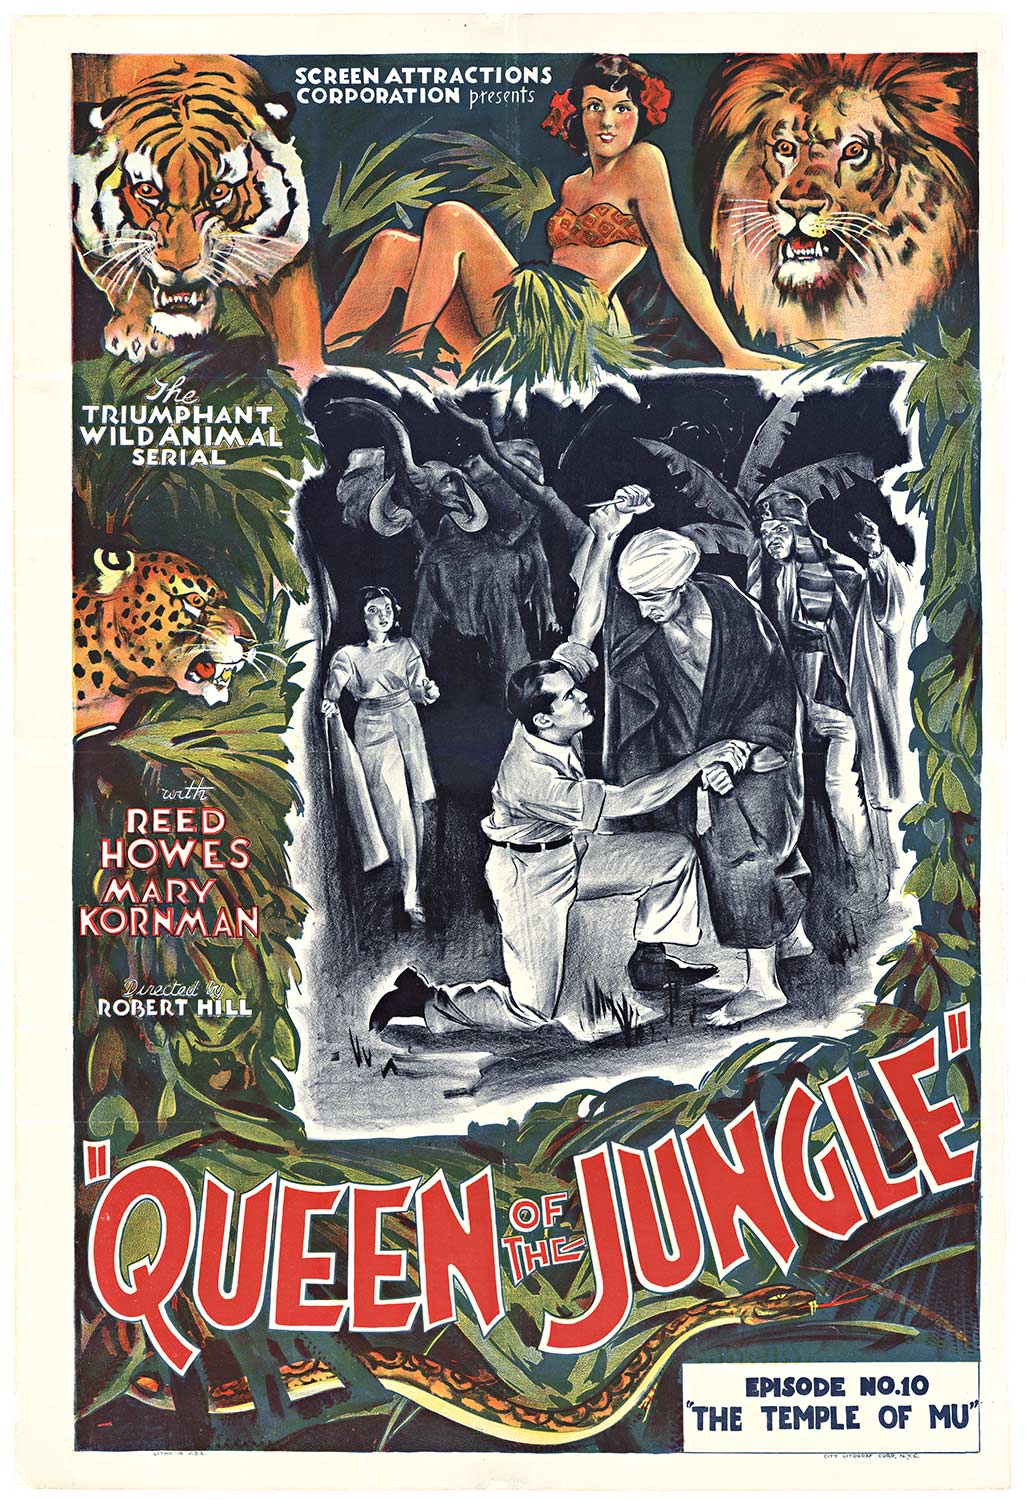 The Triumphant wild animal saga, Queen of the Jungle episode 10